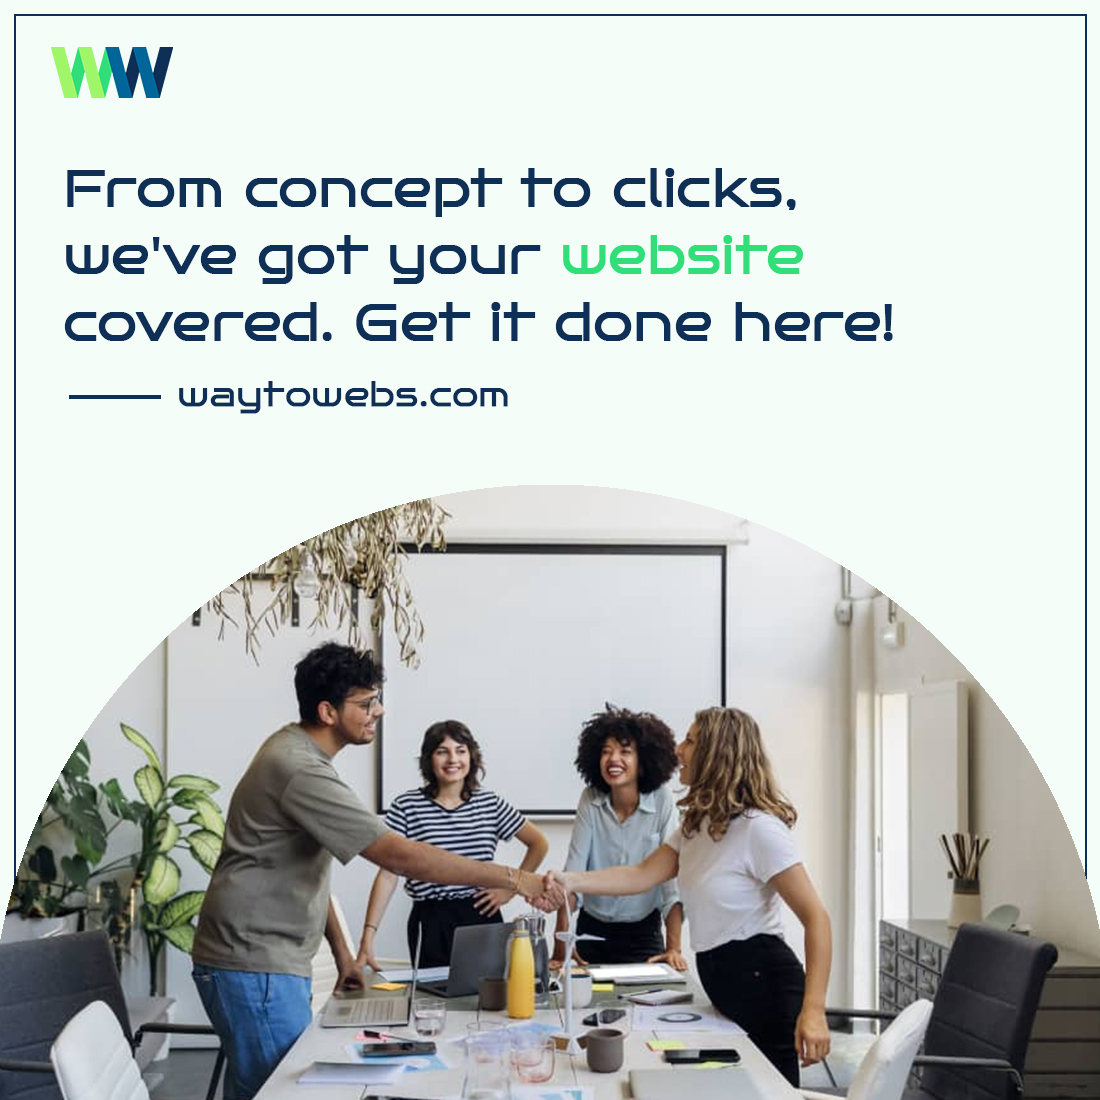 From concept to clicks, we've got your website covered. Get it done here! 💻 #WebDesign #WebDevelopment #UXDesign #UIDesign #CodeNewbie #WebDesignTrends #DigitalStrategy #Innovation #TechTalk #StartupLife #DigitalMarketing #ProgrammingLife #TechNews #Waytowebs